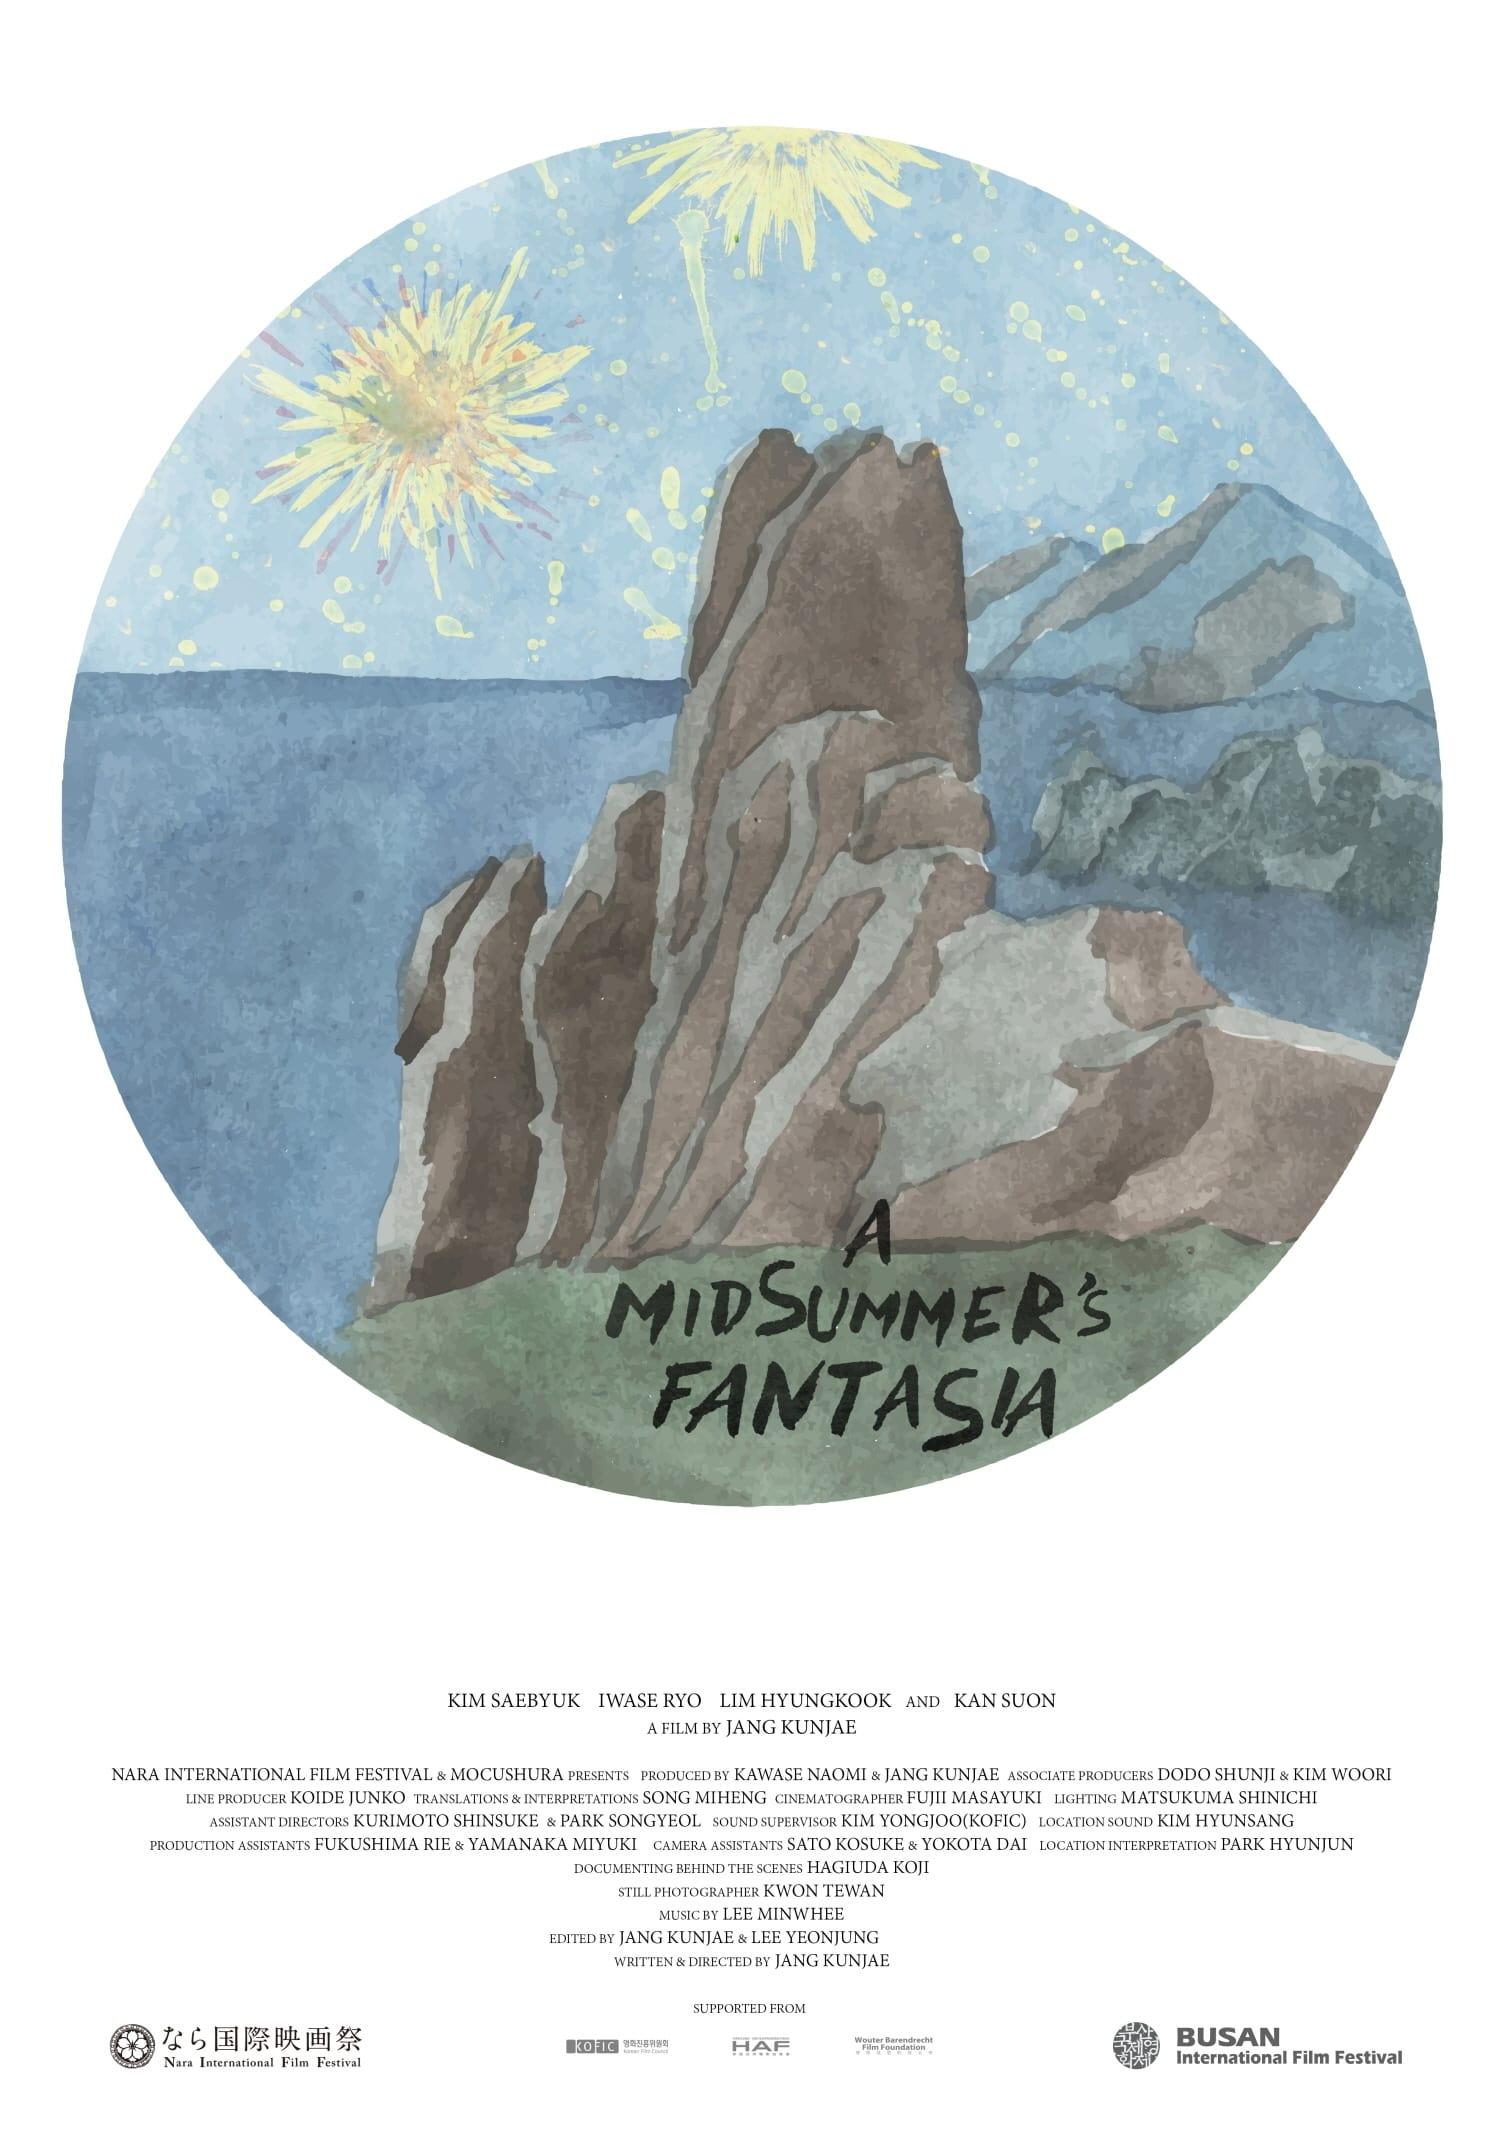 A Midsummer's Fantasia poster